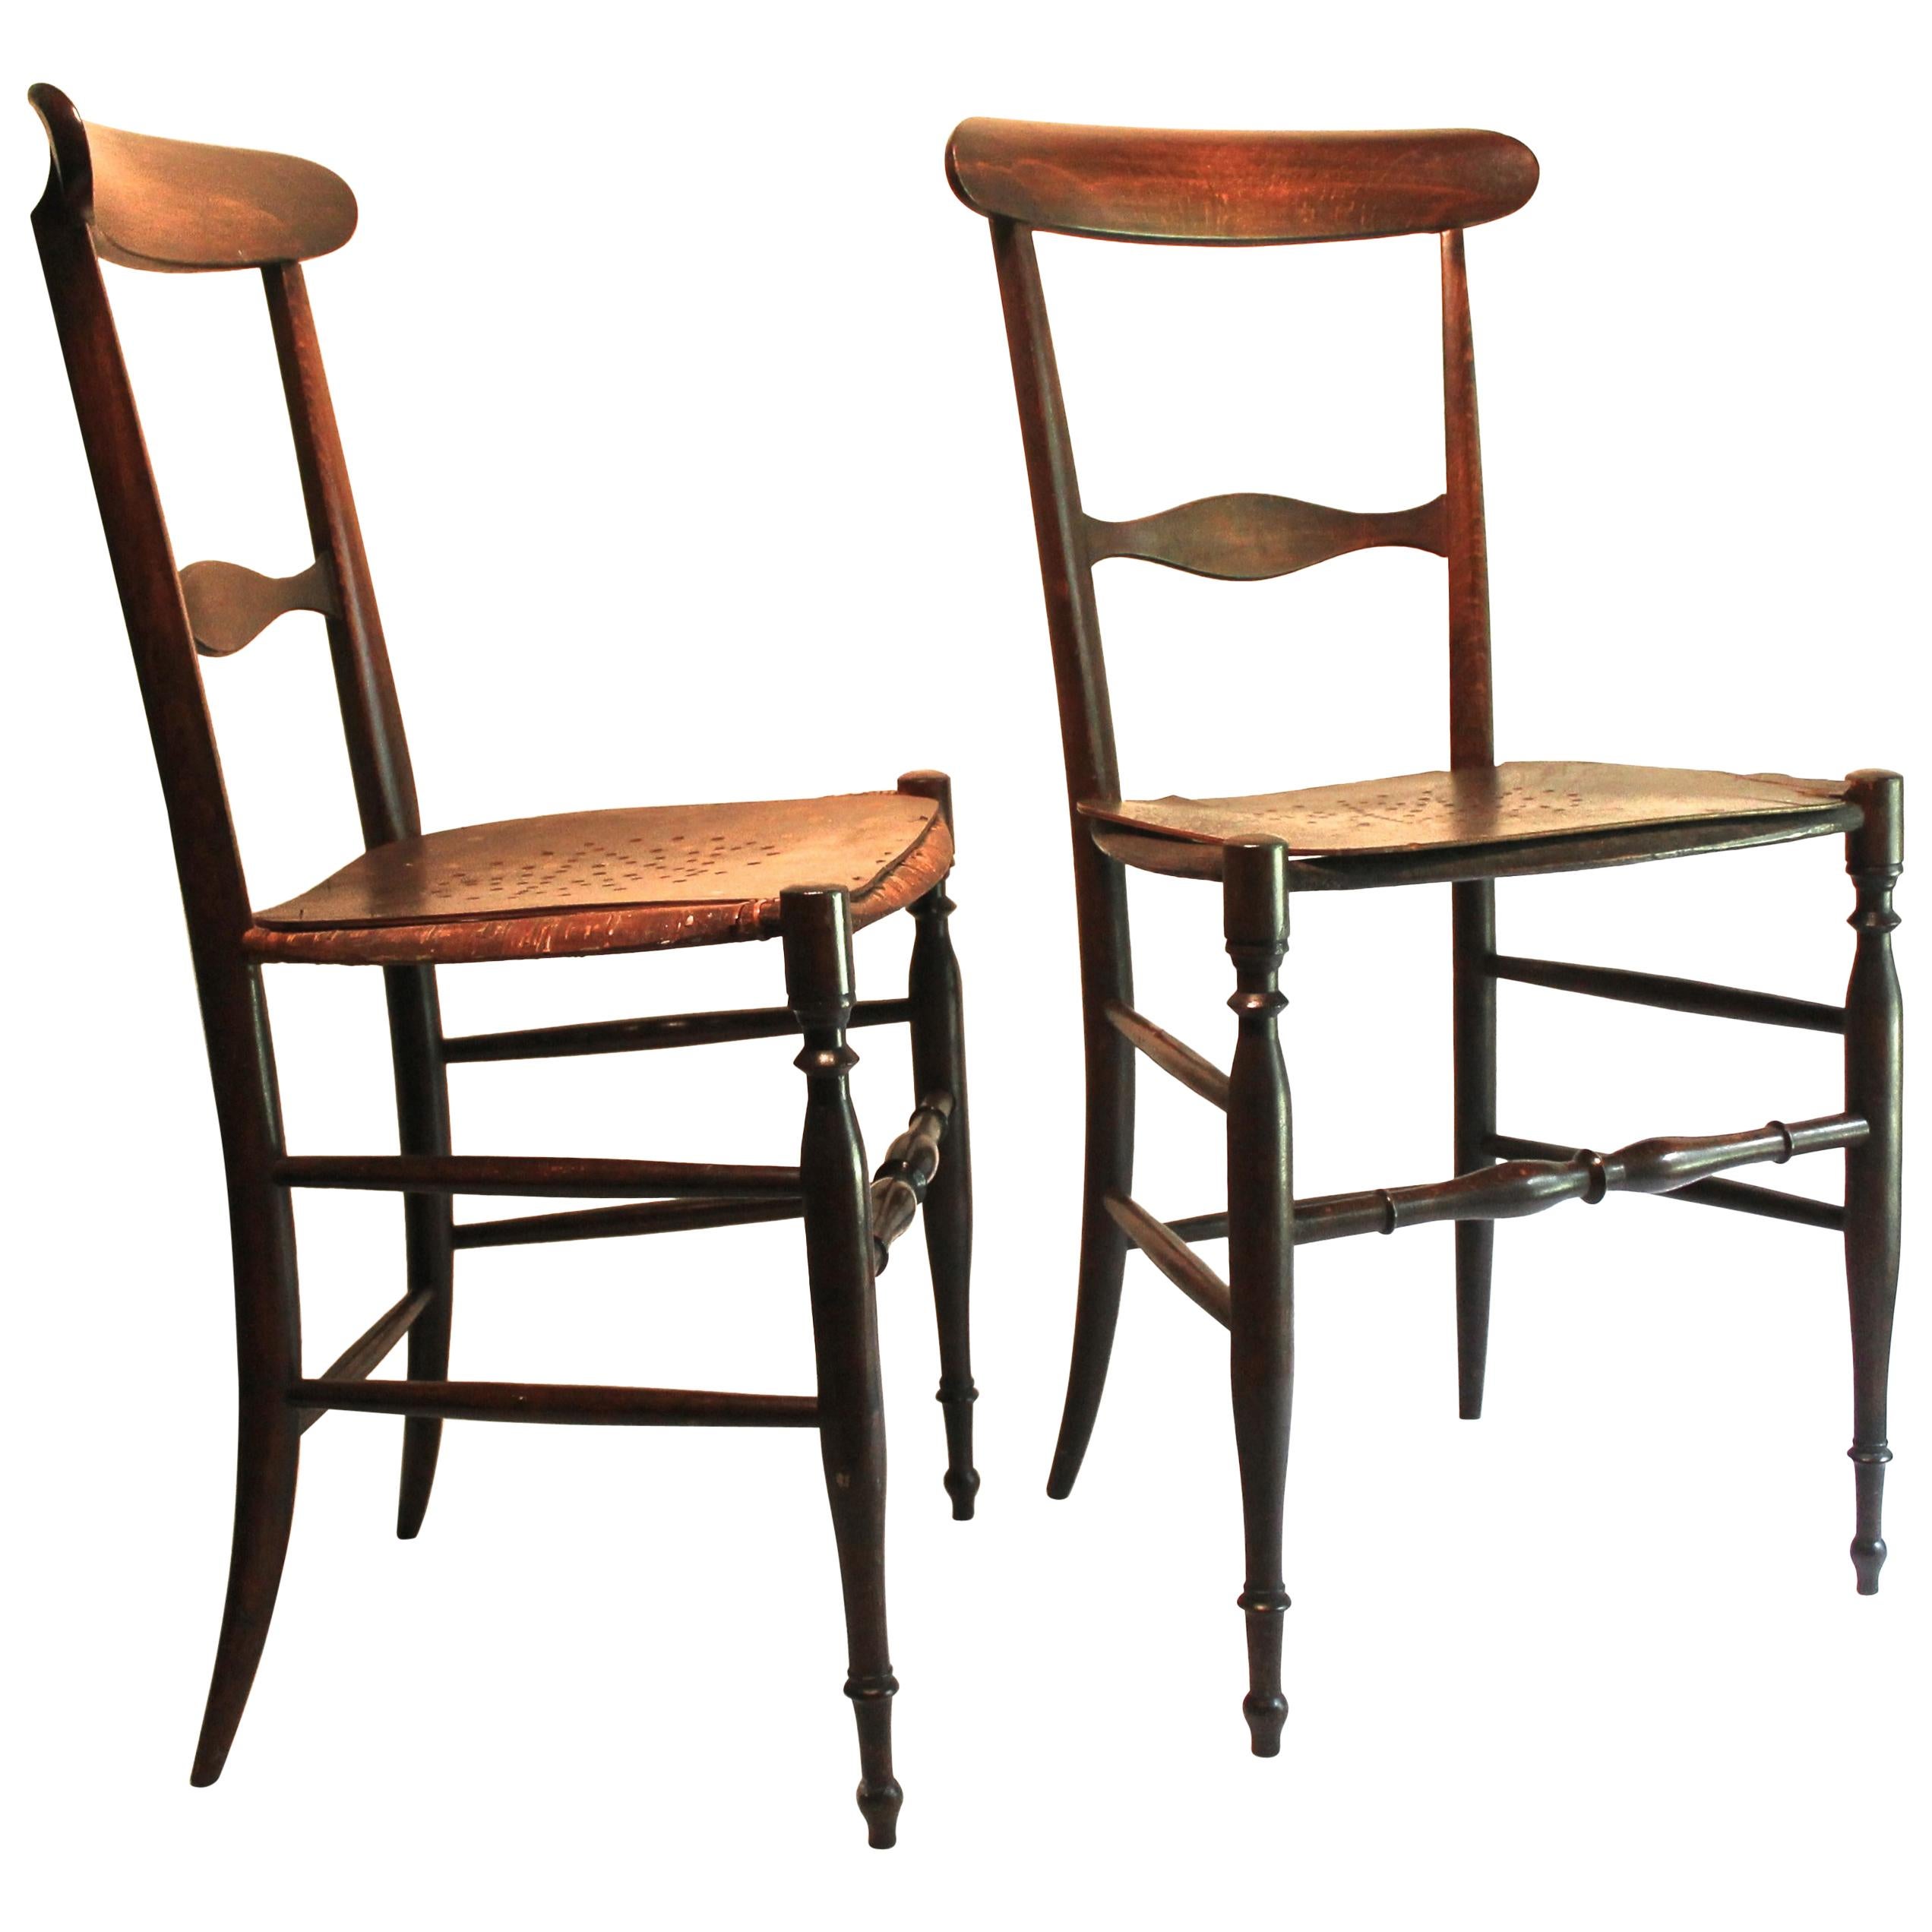 Pair of Early Chiavari Chairs by Giuseppe Gaetano Descalzi